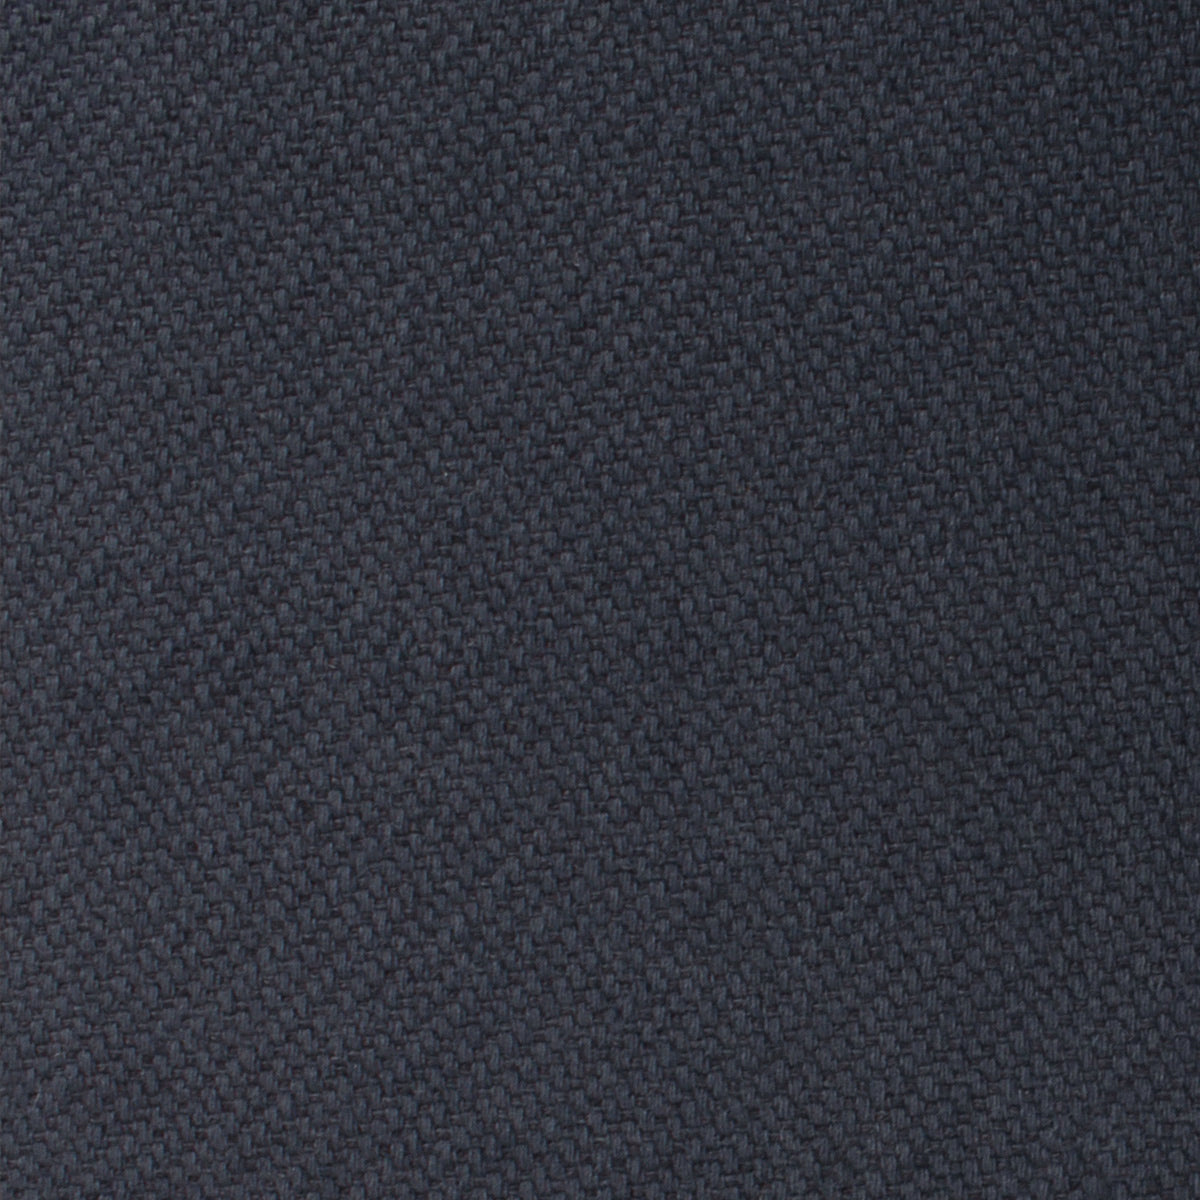 Öland Navy Blue Linen Fabric Swatch